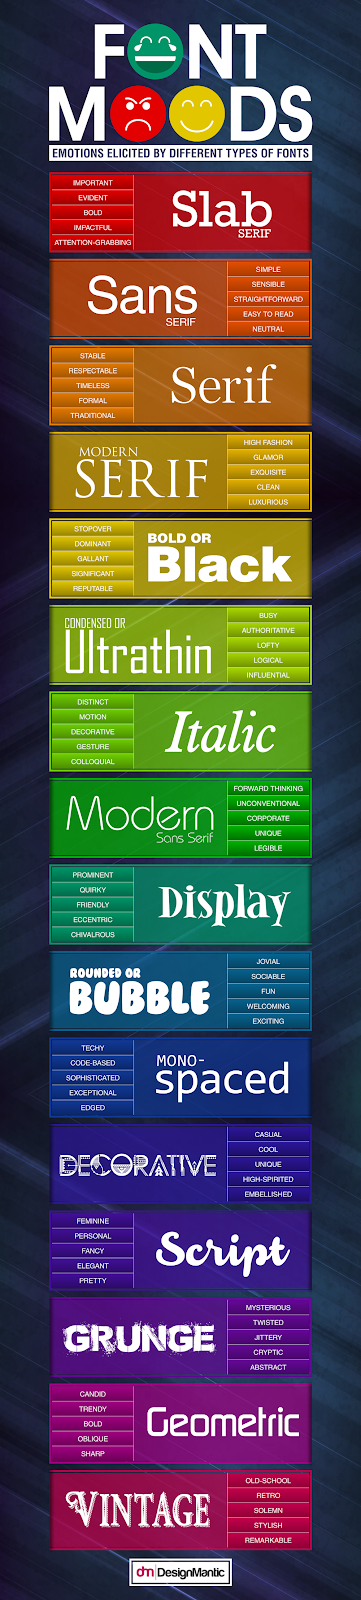 designmantic webiste font moods infographic